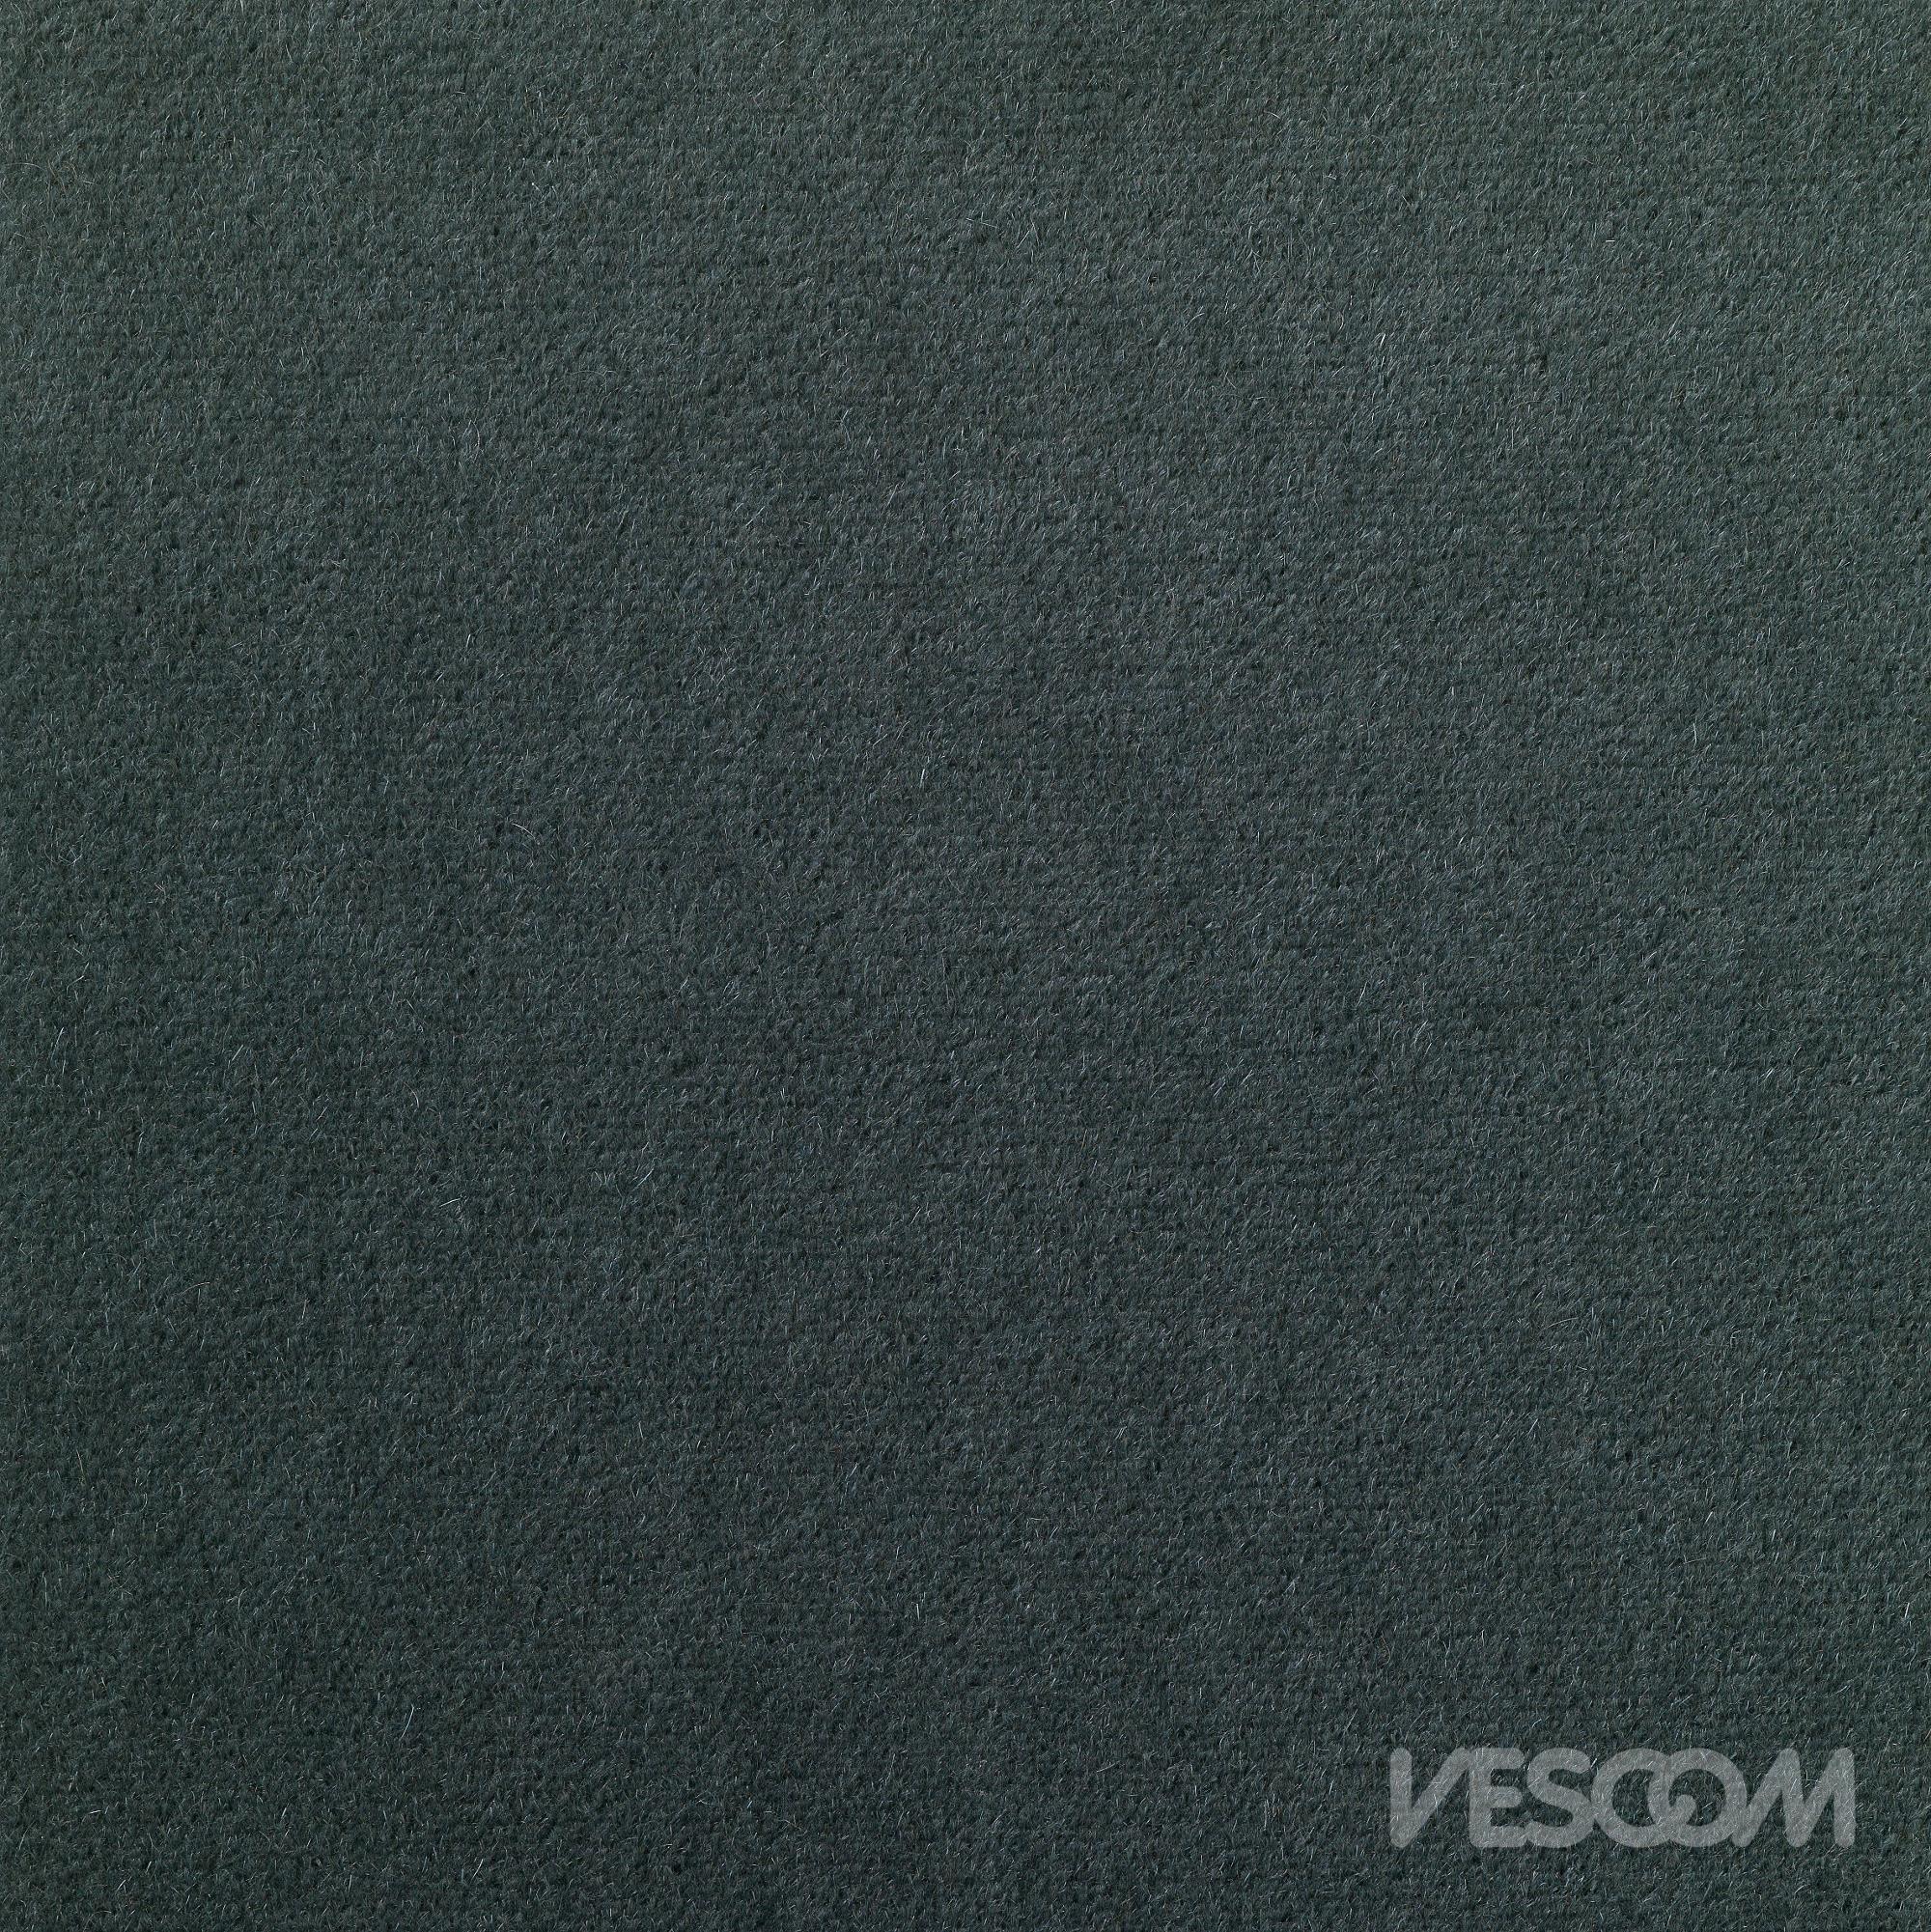 Vescom Ariana Upholstery Fabric 7061.07